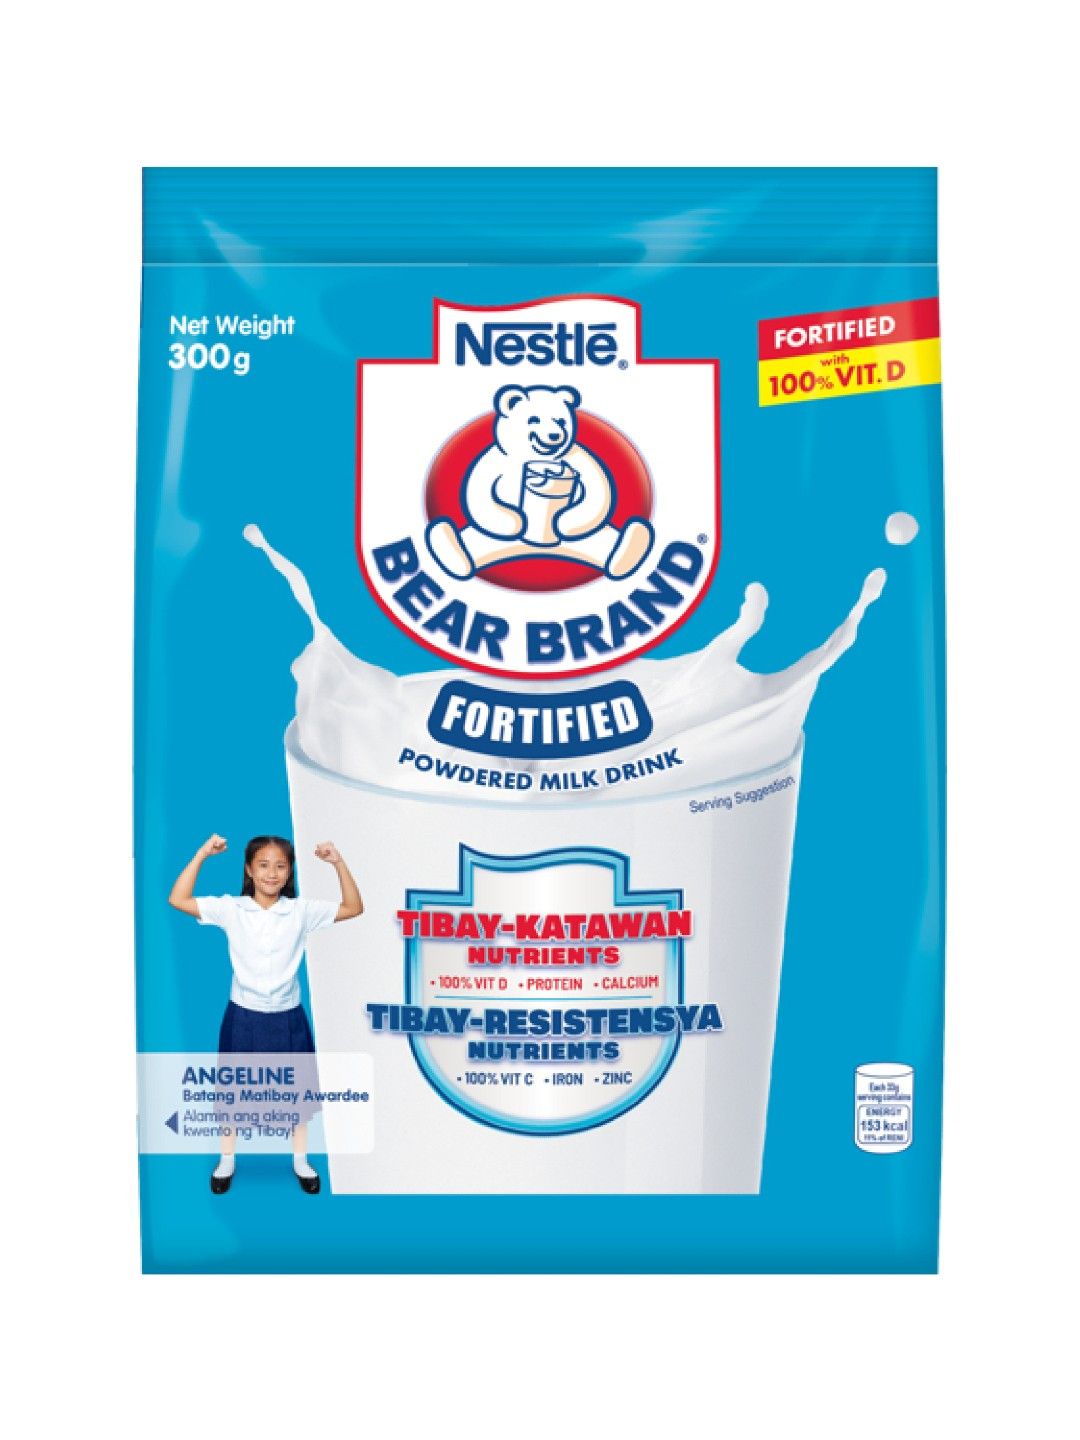 Bear Brand Fortified Powdered Milk Drink (300g)